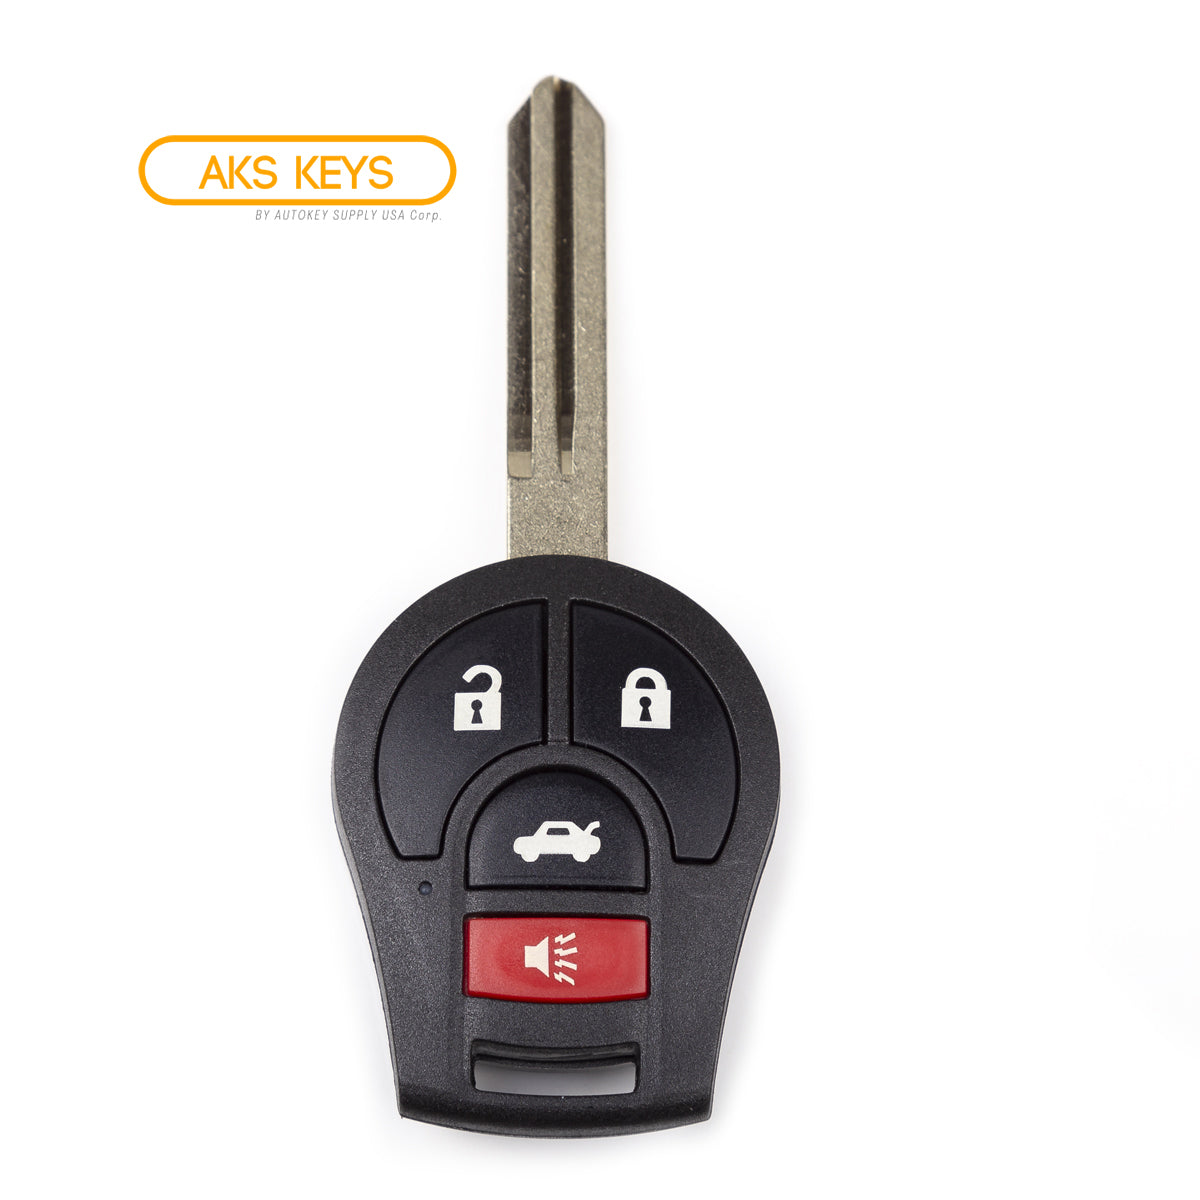 2005 Nissan Armada Key Fob - Aftermarket - 4 Buttons Fob FCC# CWTWB1U751 - ID46 Chip